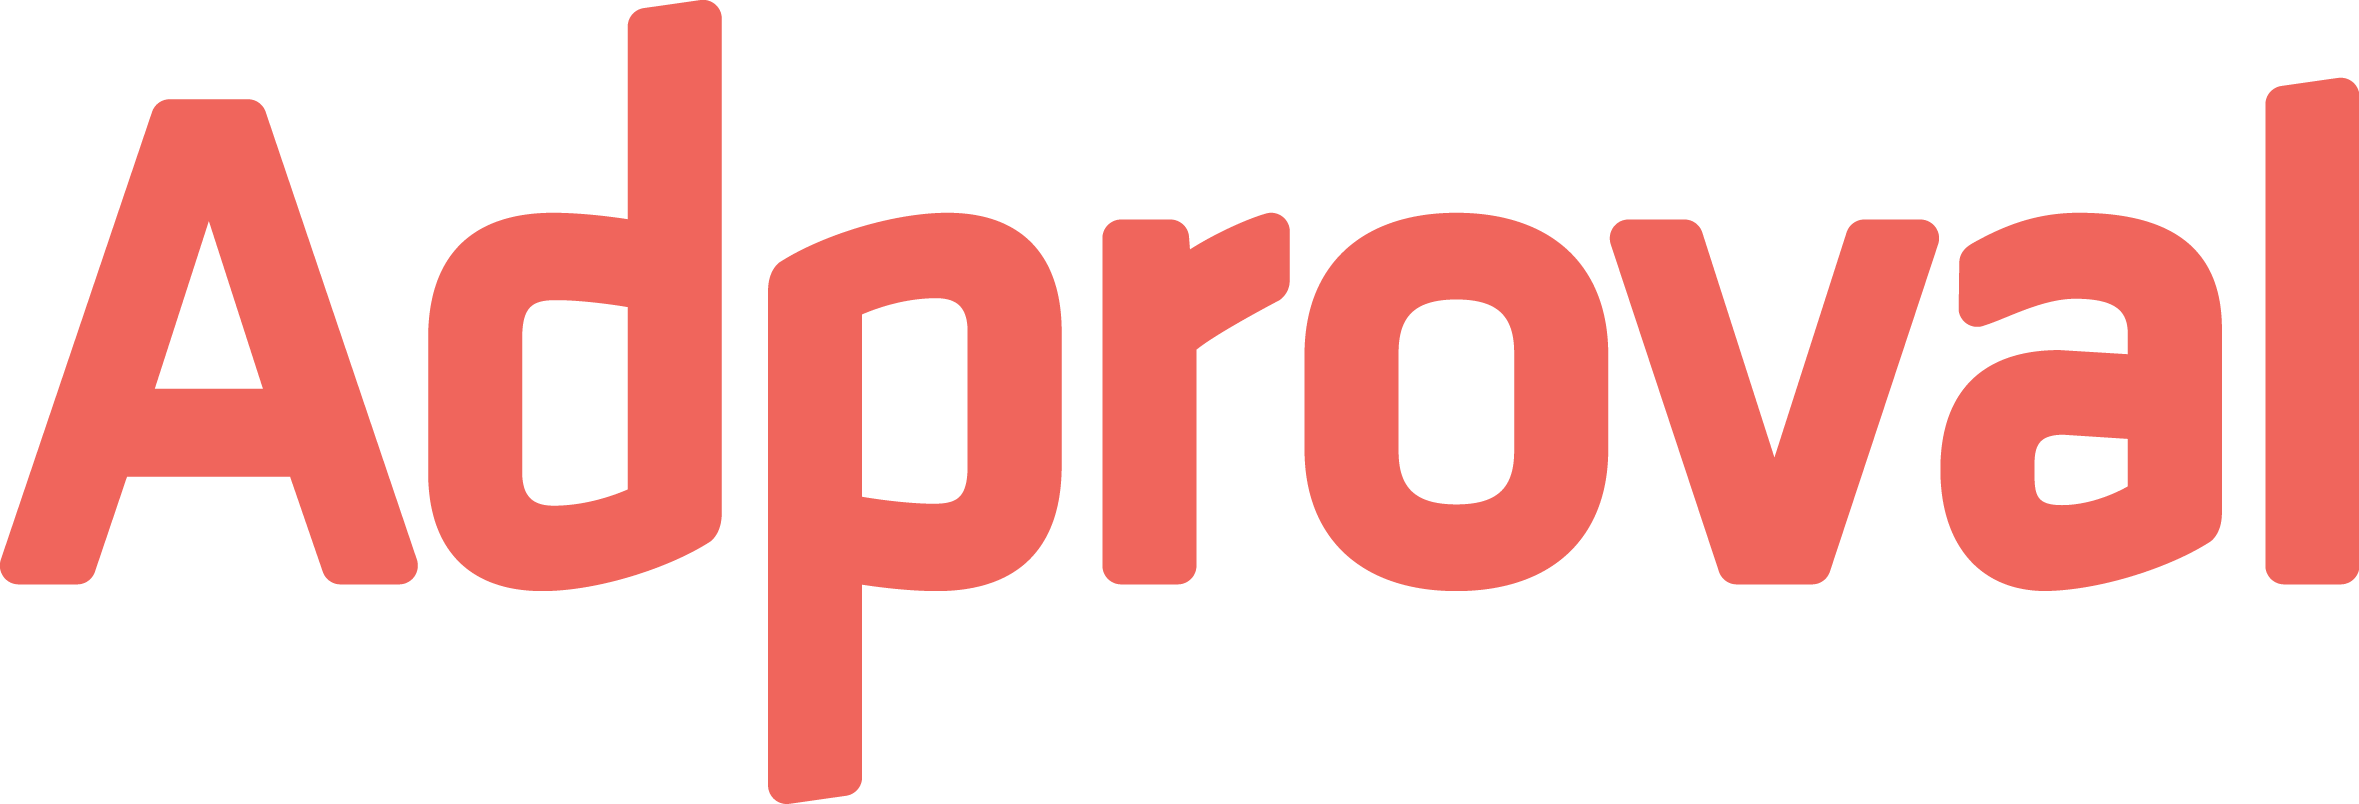 Adproval Logo 